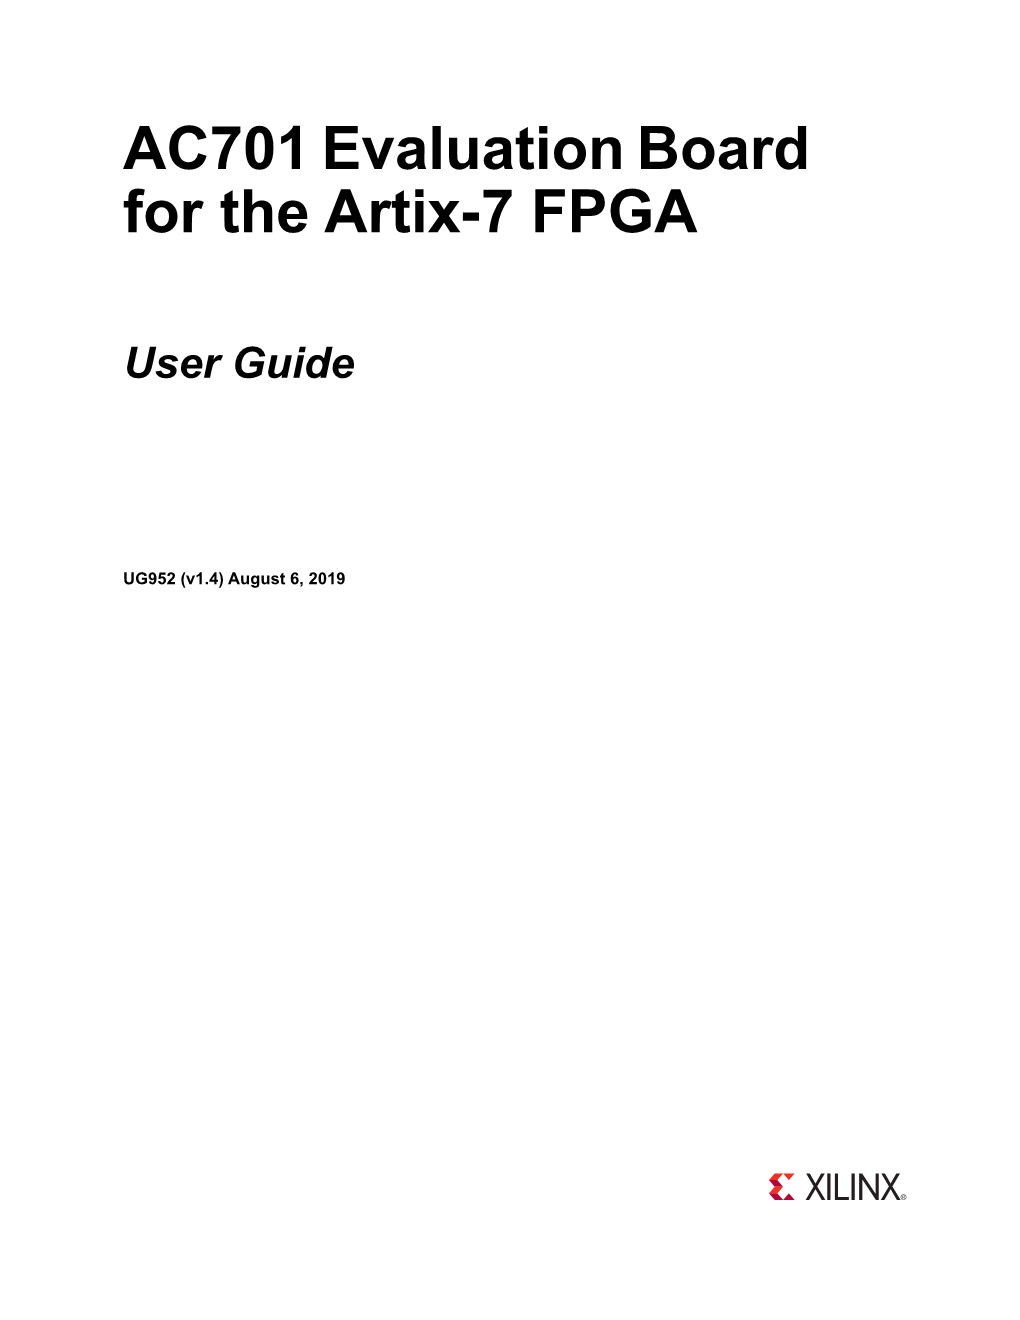 AC701 Evaluation Board for the Artix-7 FPGA User Guide (UG952)